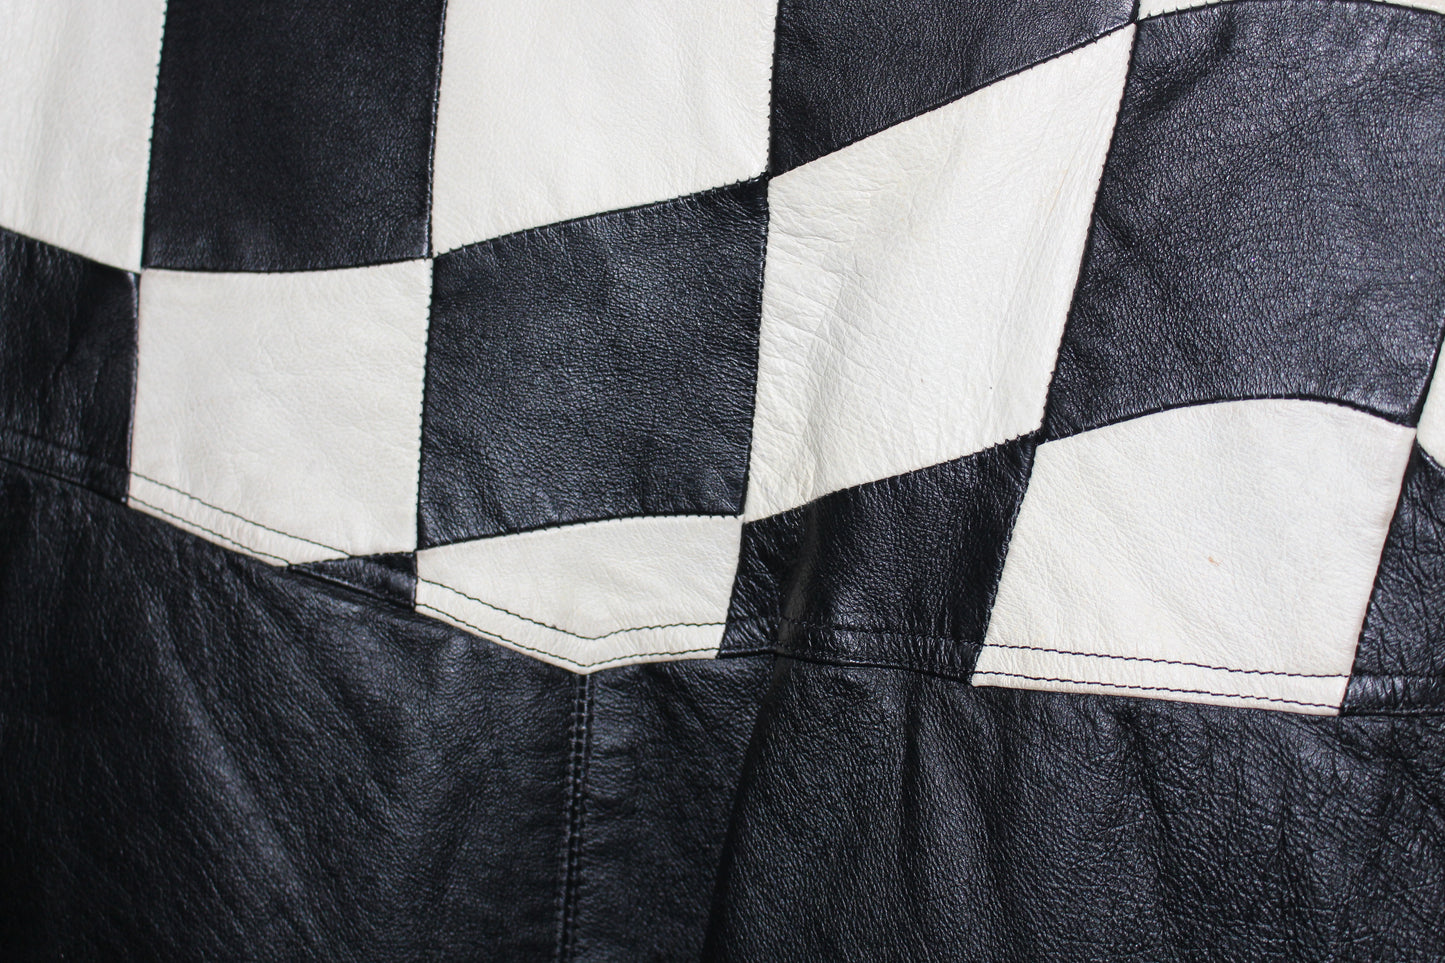 Burk’s Bay Checkered Flag NASCAR Leather Jacket (XL)